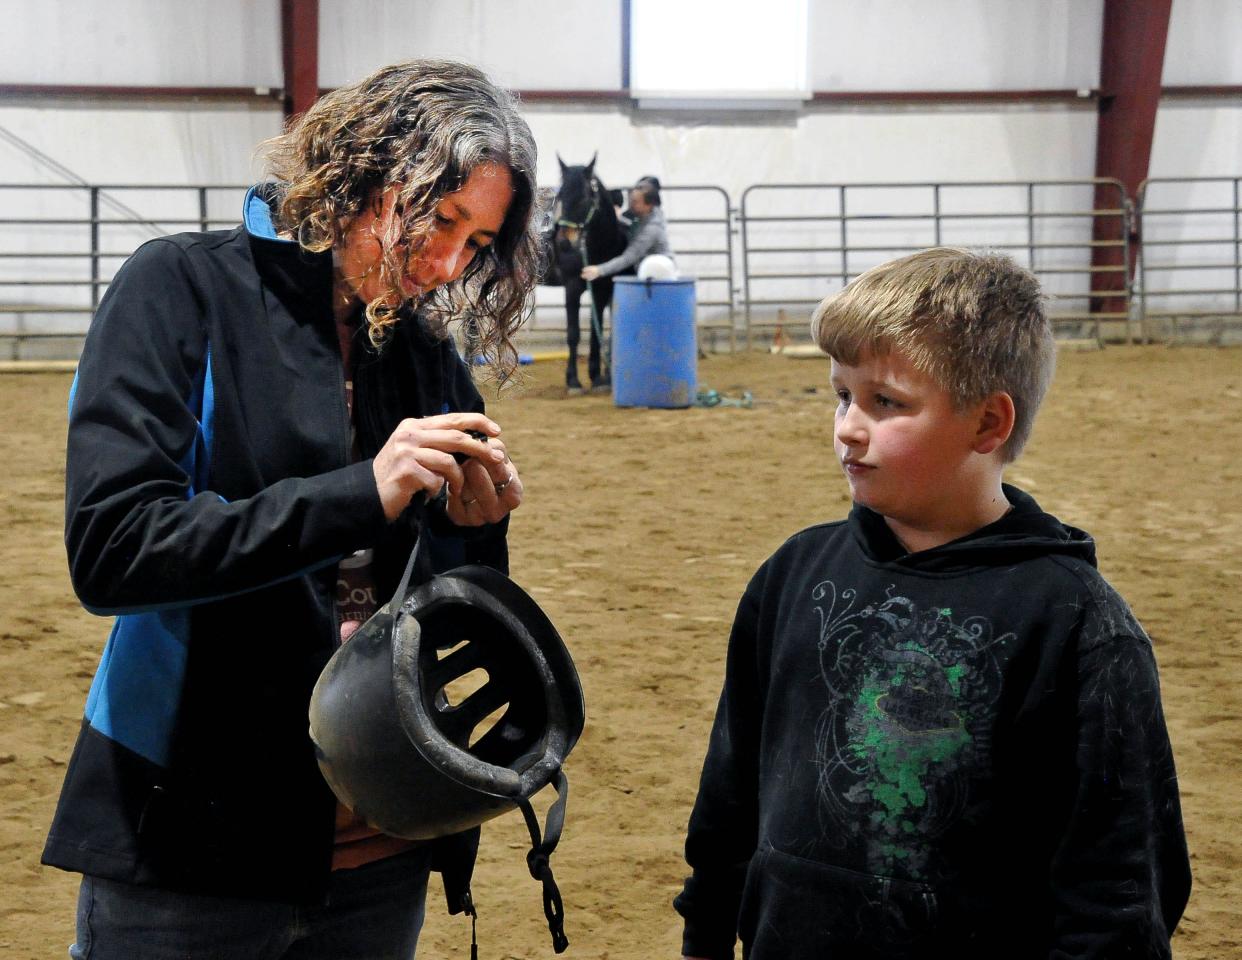 Stirrup Courage founder Tara Steiner adjusts a safety helmet for Landon Vierheller before he rides a horse.